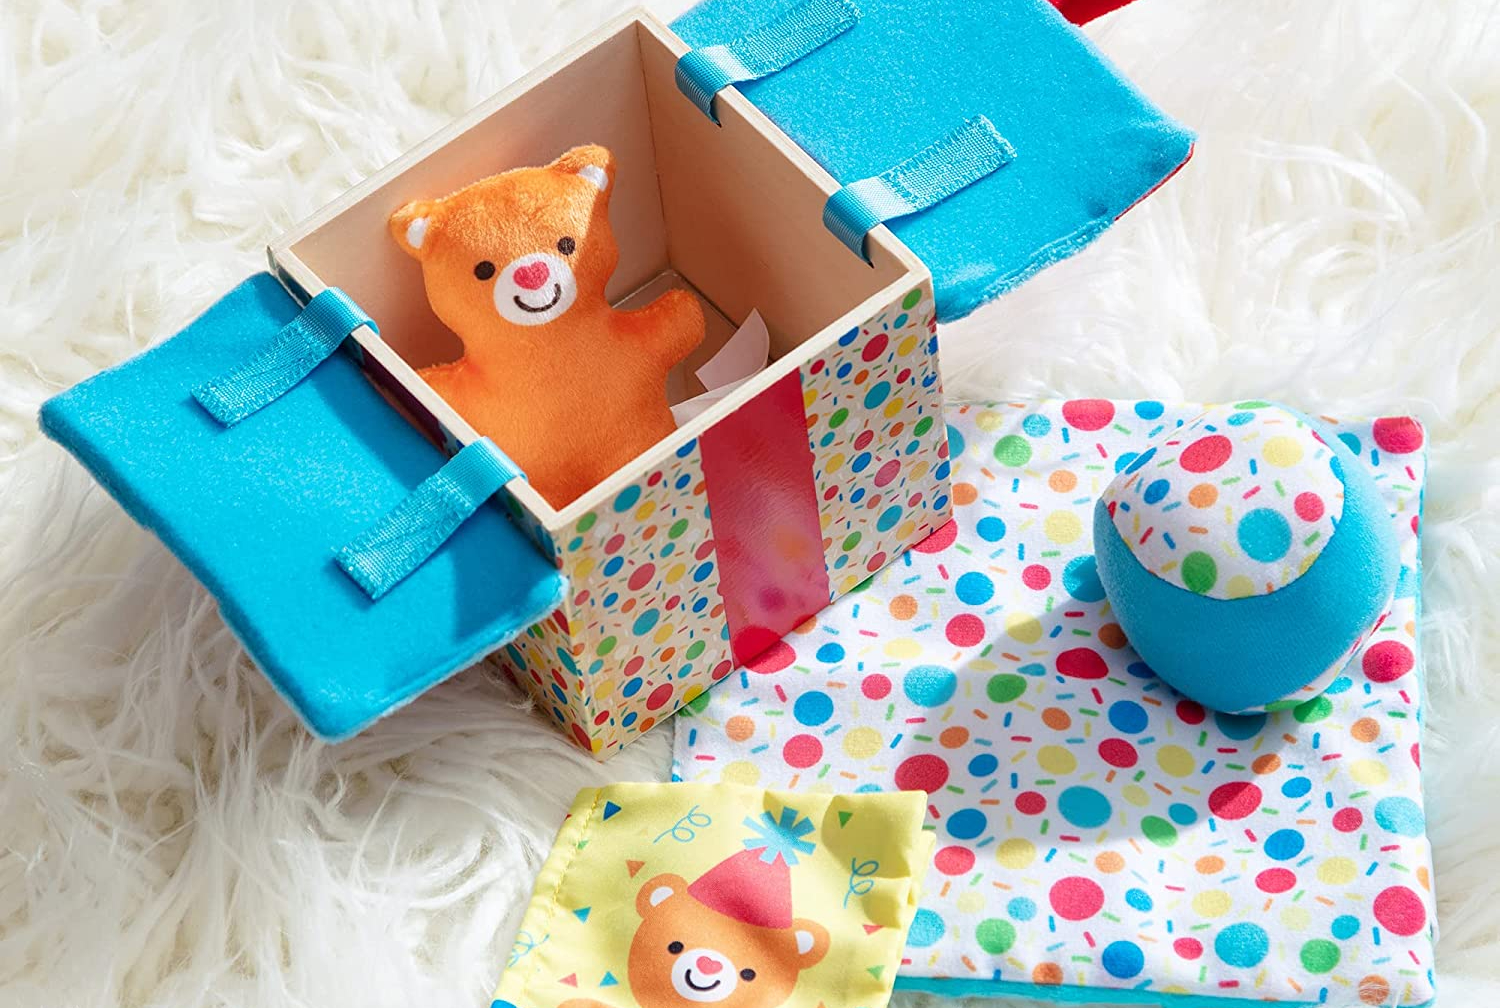 melissa & doug wooden surprise gift box infant toy